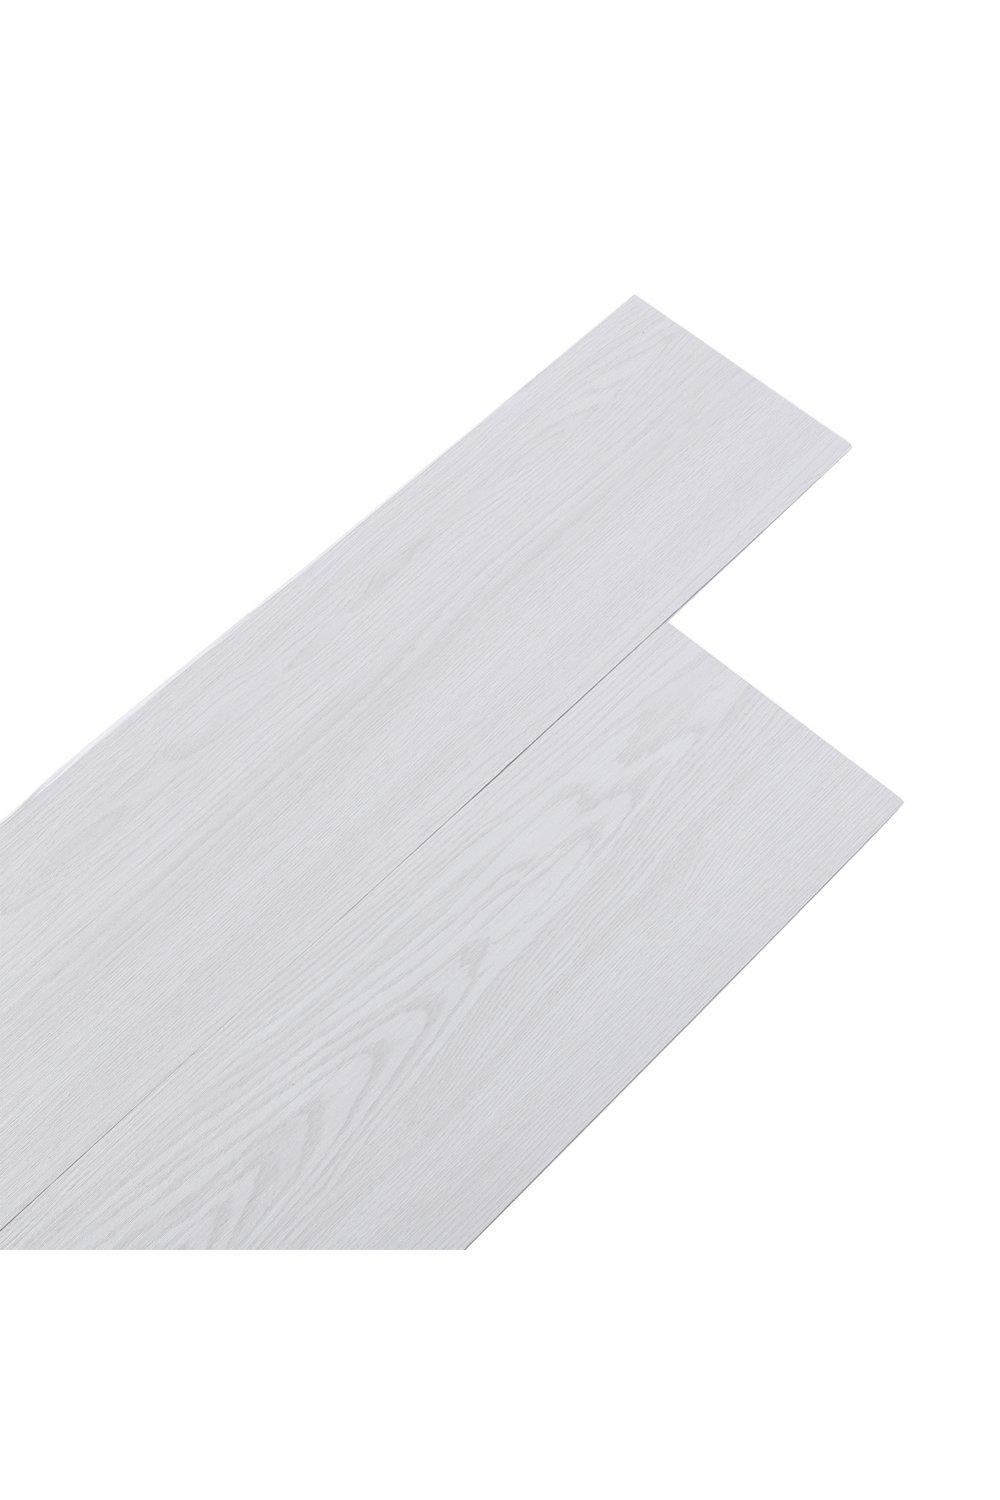 36Pcs Wood Grain Plank PVC Flooring